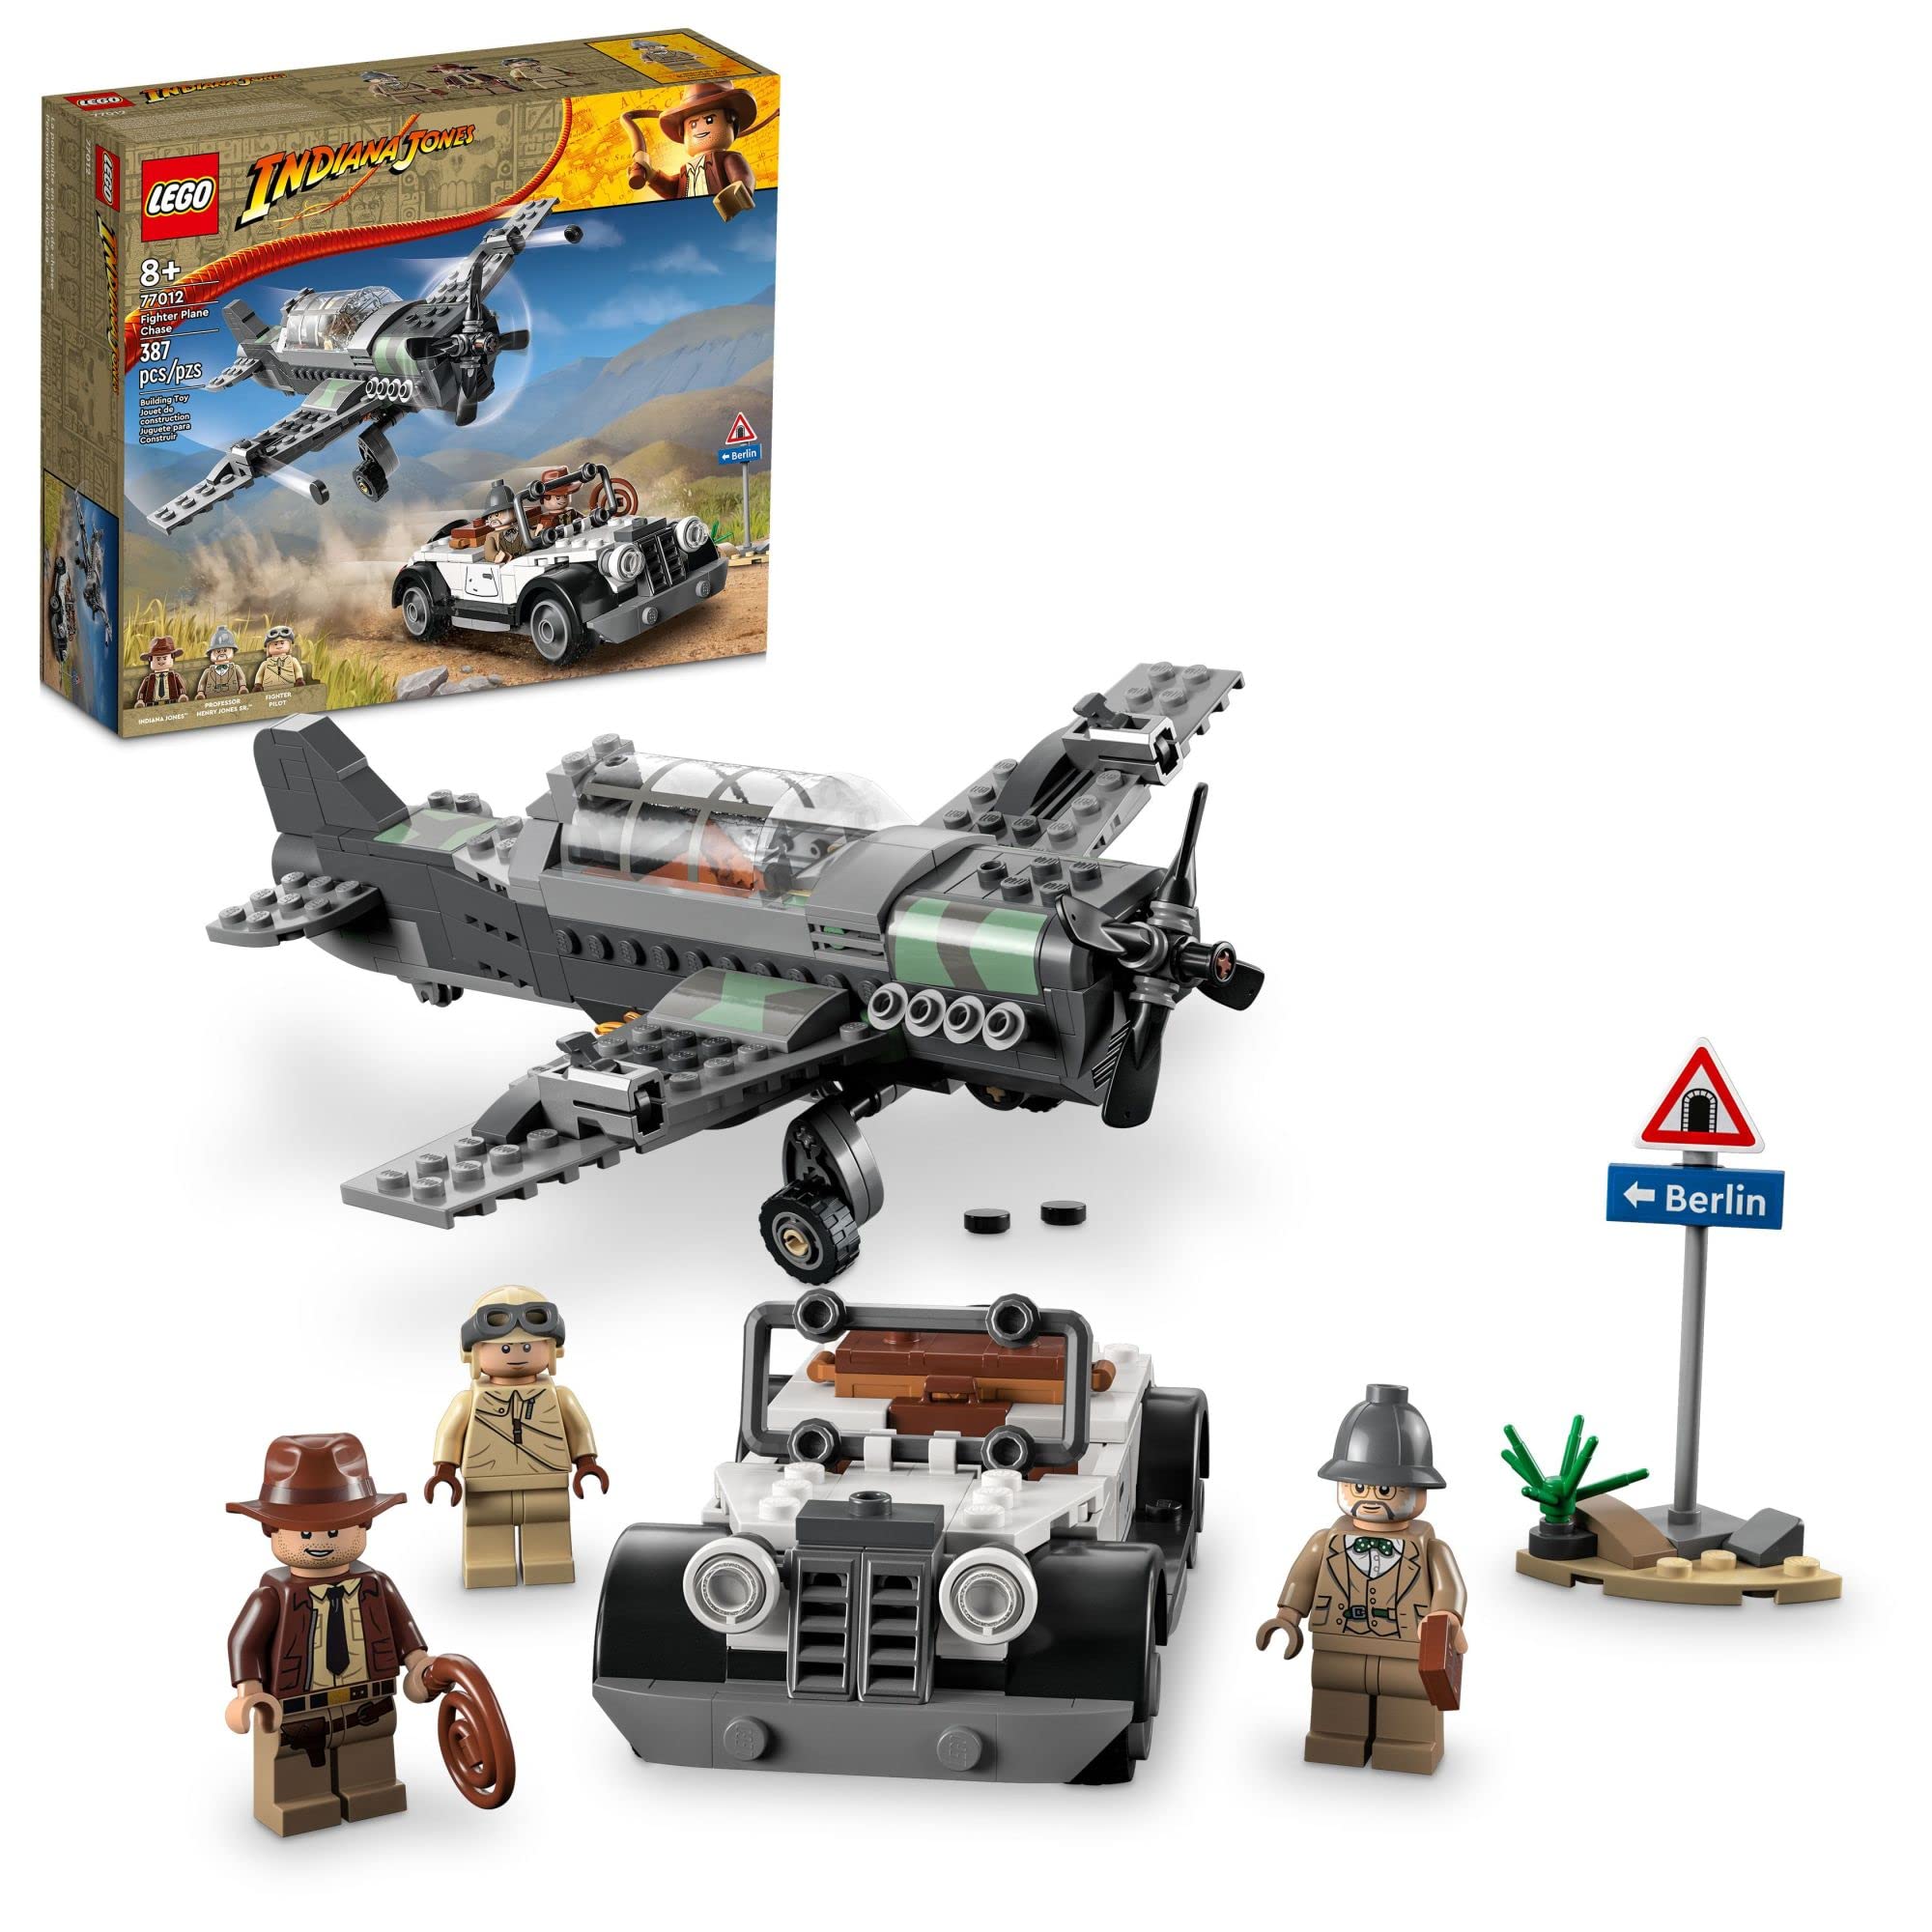 LEGO Indiana Jones set